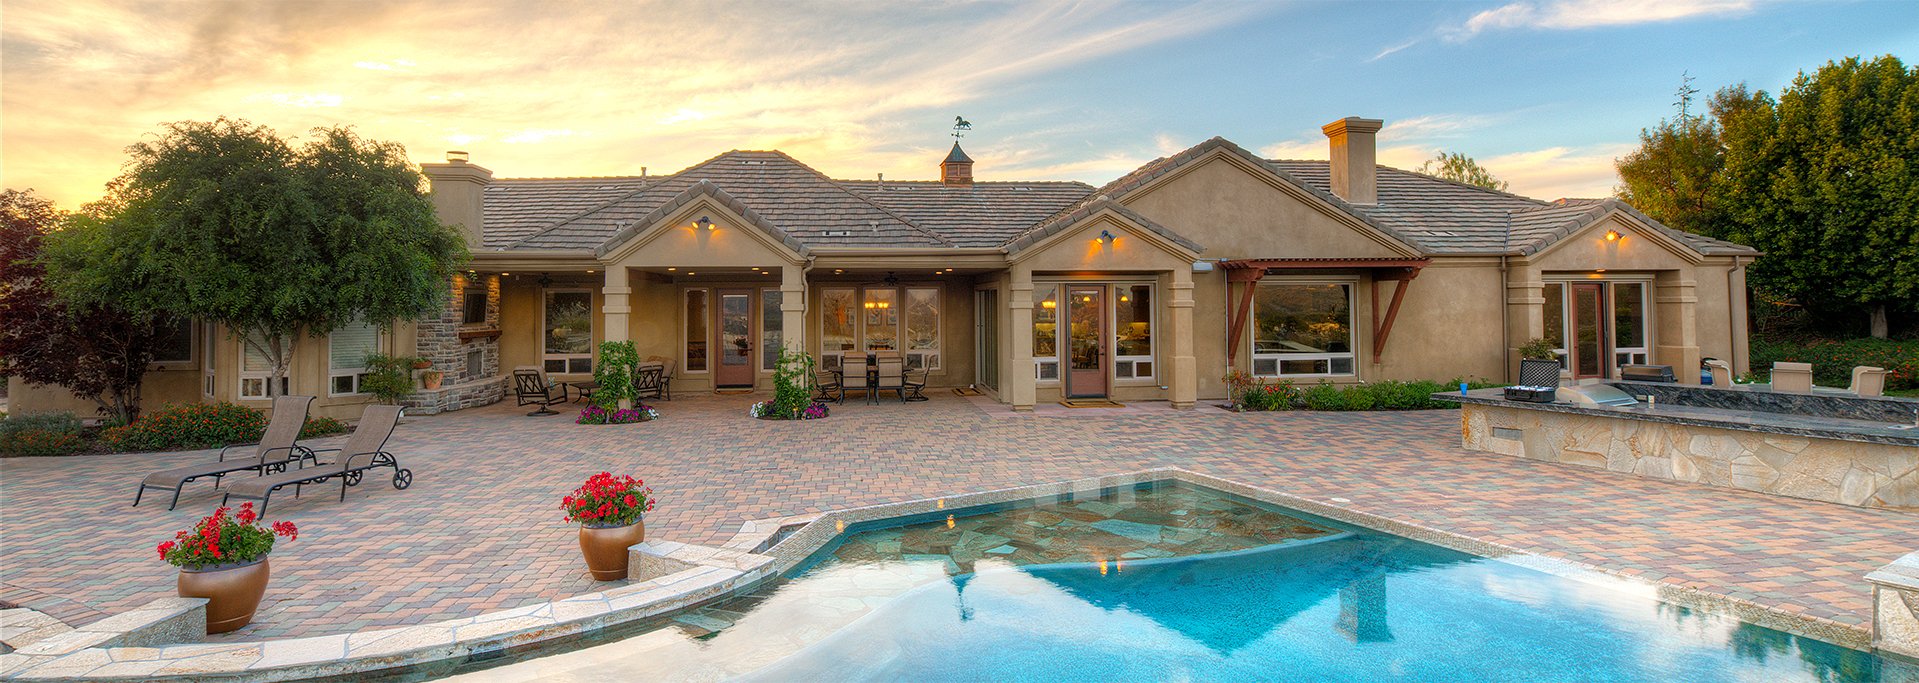 Top-Rated Custom Home Remodels in San Diego CA